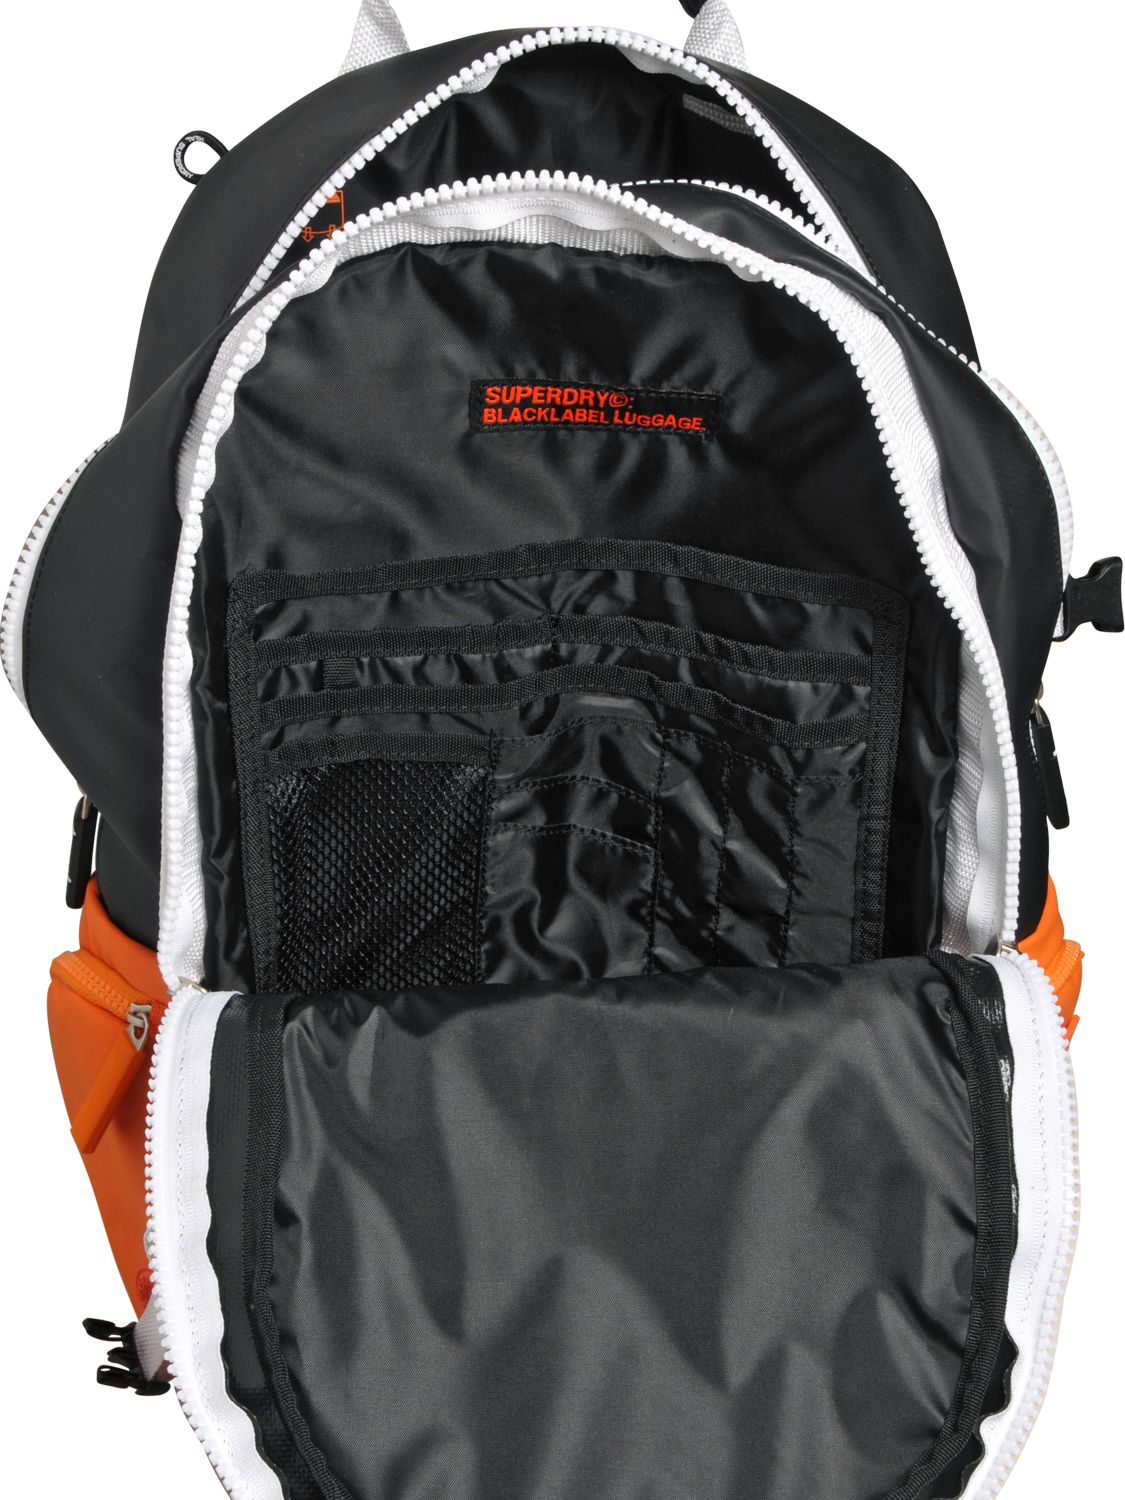 Superdry Water Resistant Pop Tarp Backpack in Orange for Men - Lyst